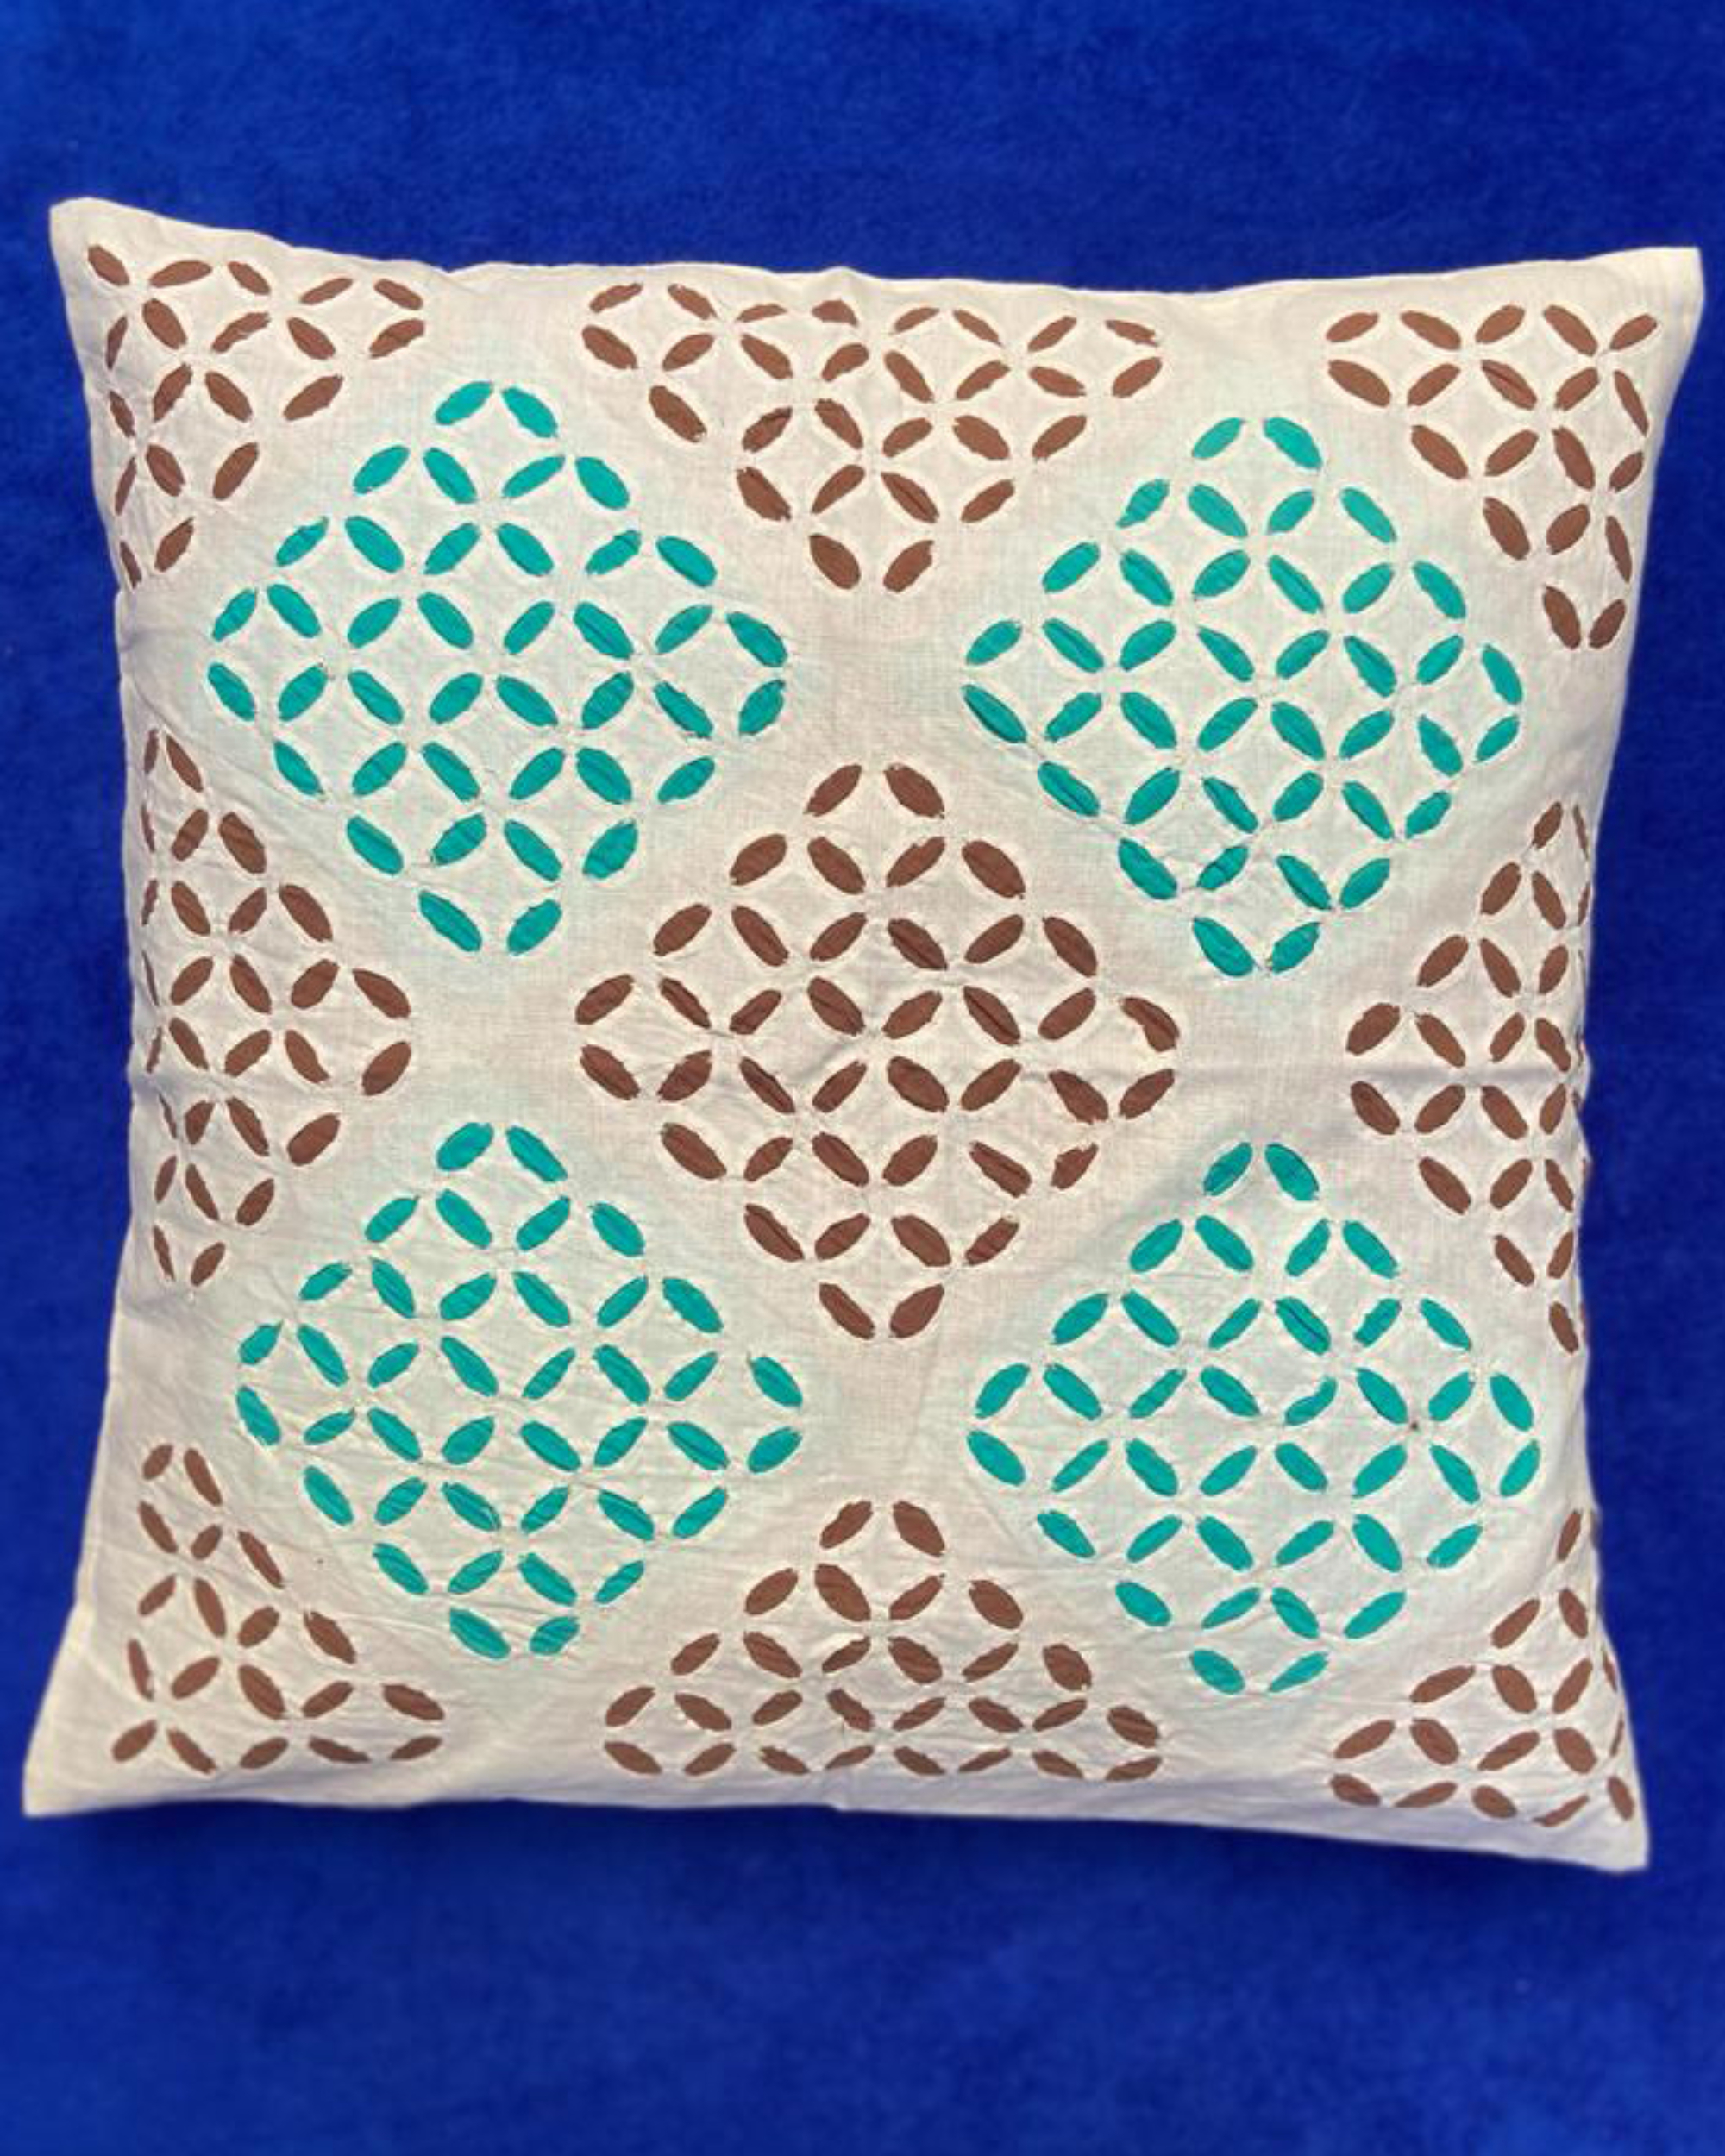 Multicolour applique cutwork cotton cushion cover